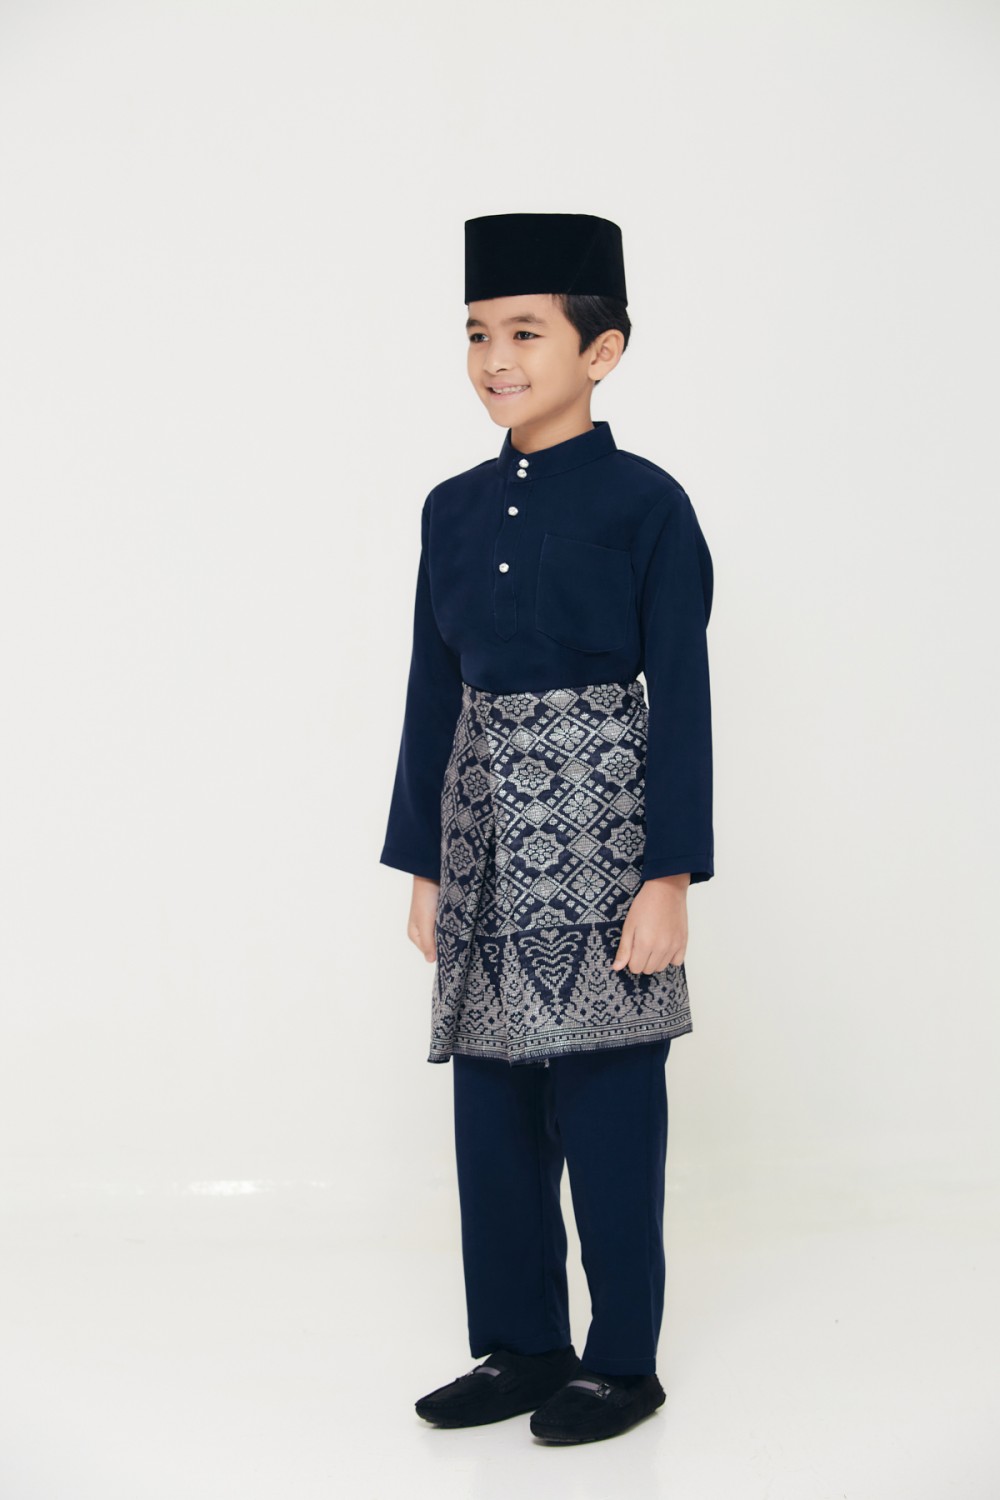 Baju Melayu Juma Kids In Navy Blue